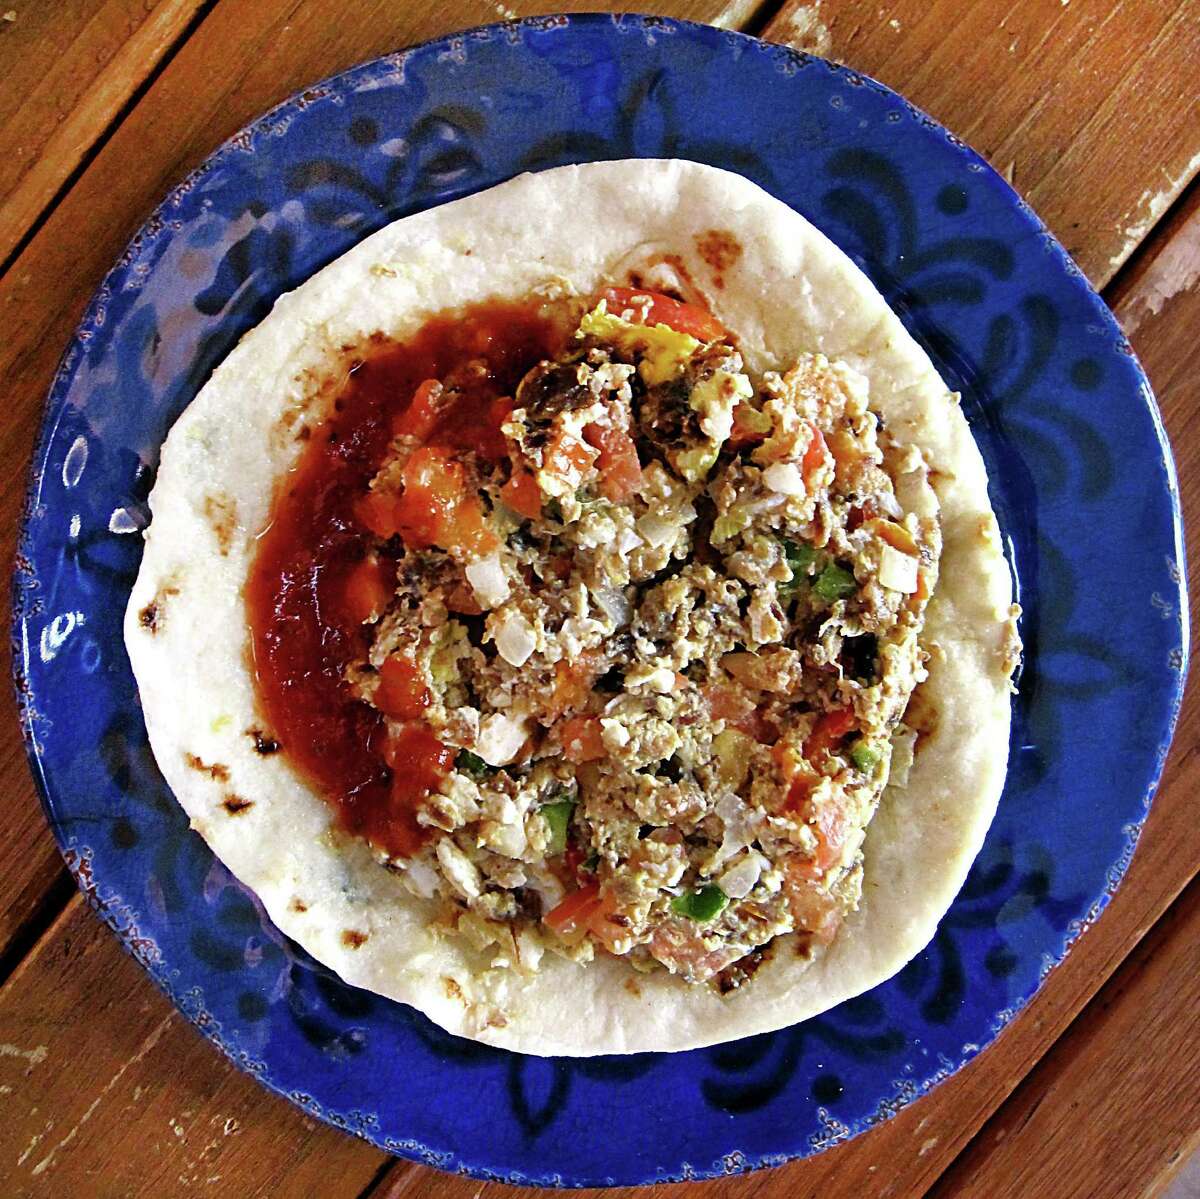 Machacado a la Mexicana taco on a flour tortilla from Pete's Tako House on Brooklyn Avenue.